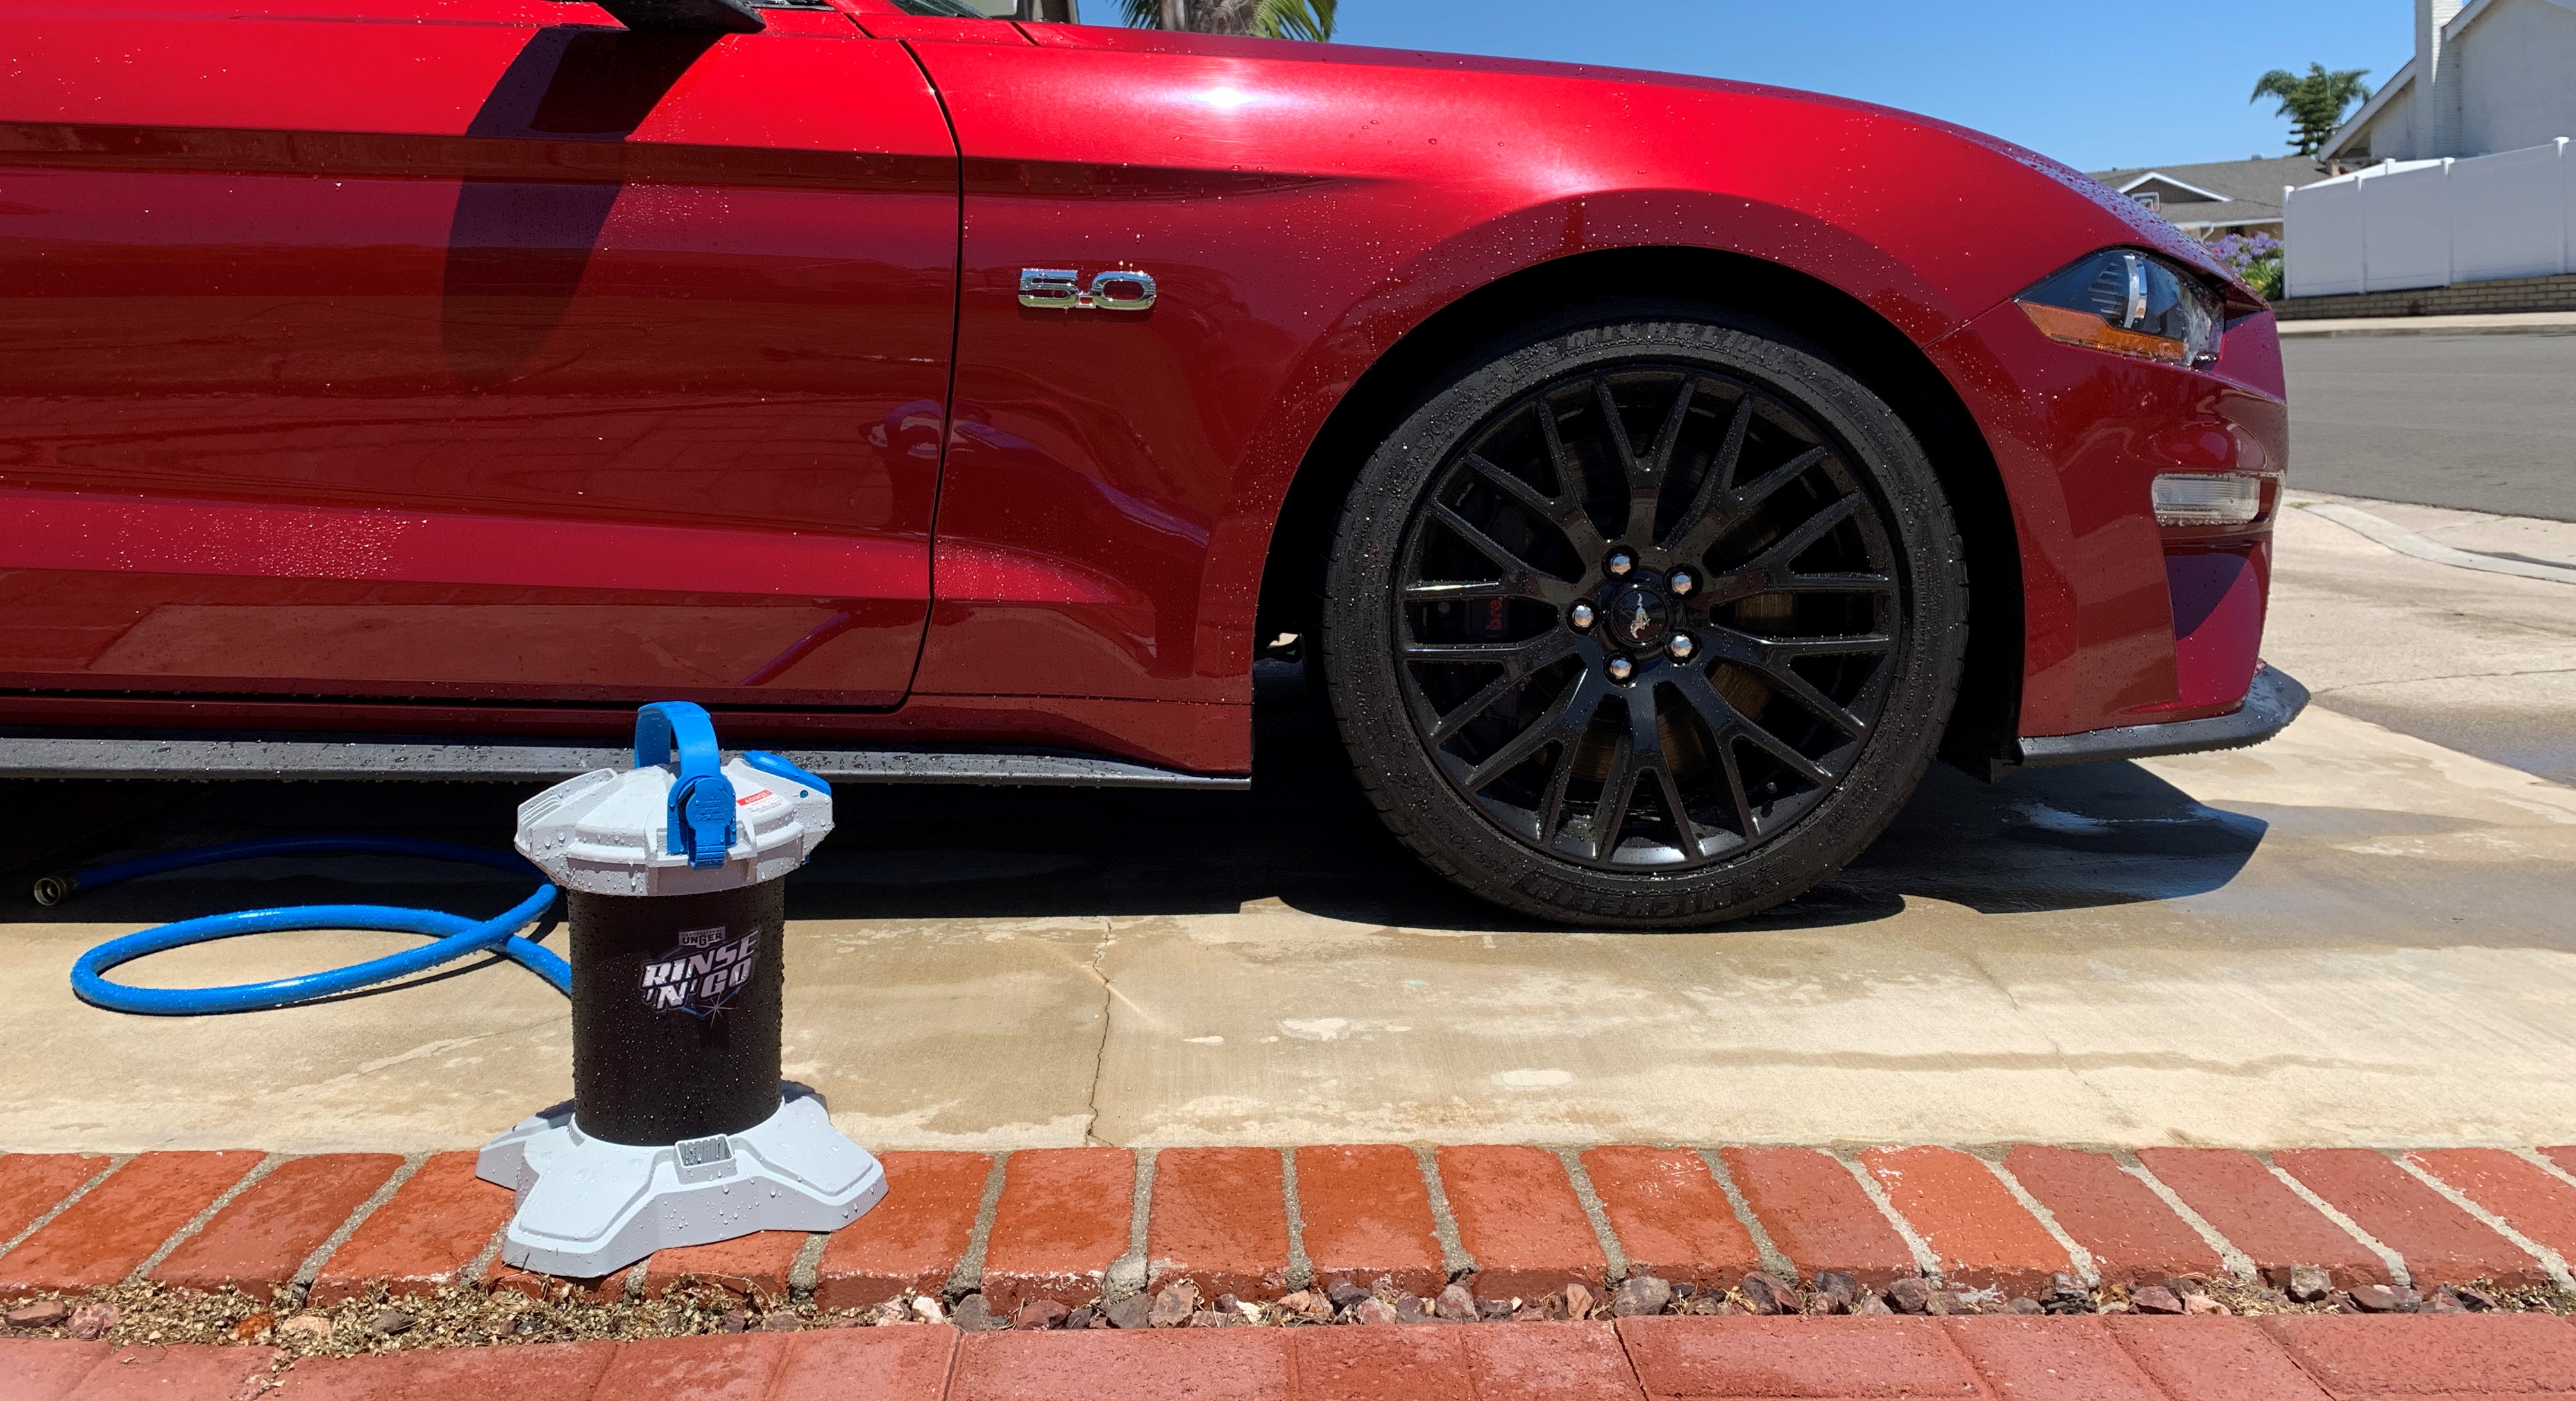 Unger Professional Rinse 'n' Go Spotless Water Deionized Car Wash